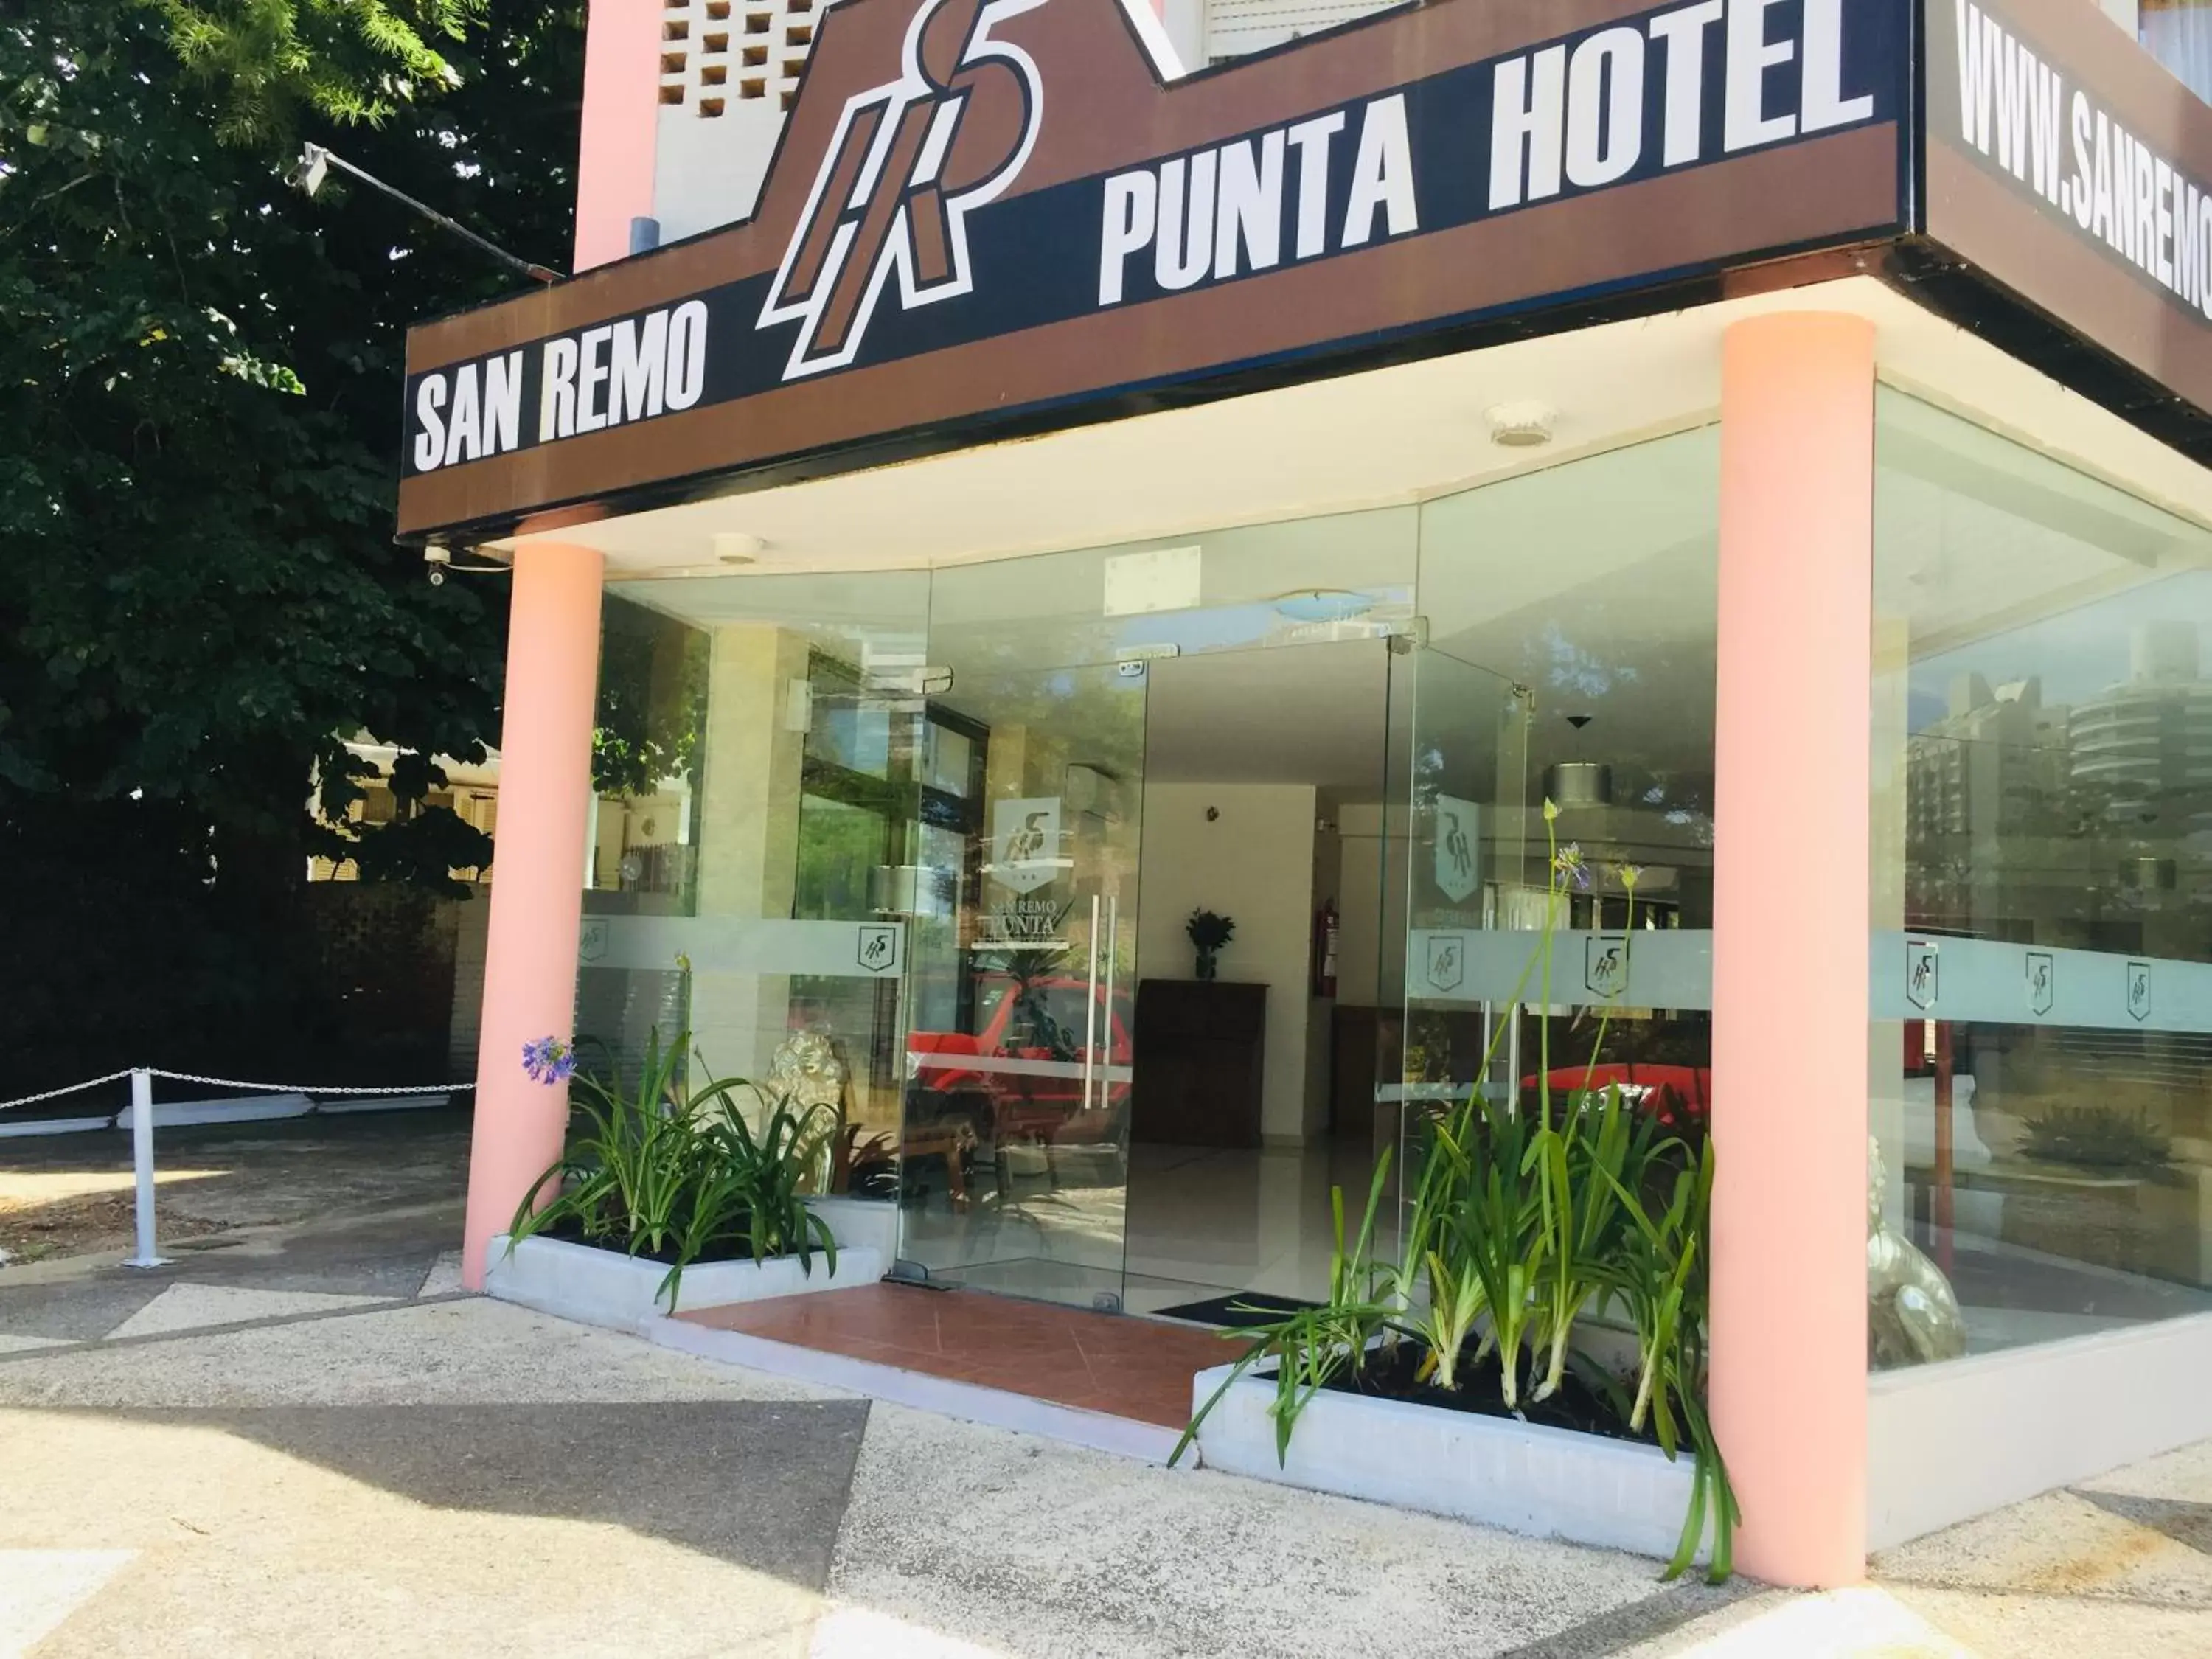 Property building in San Remo Punta Hotel